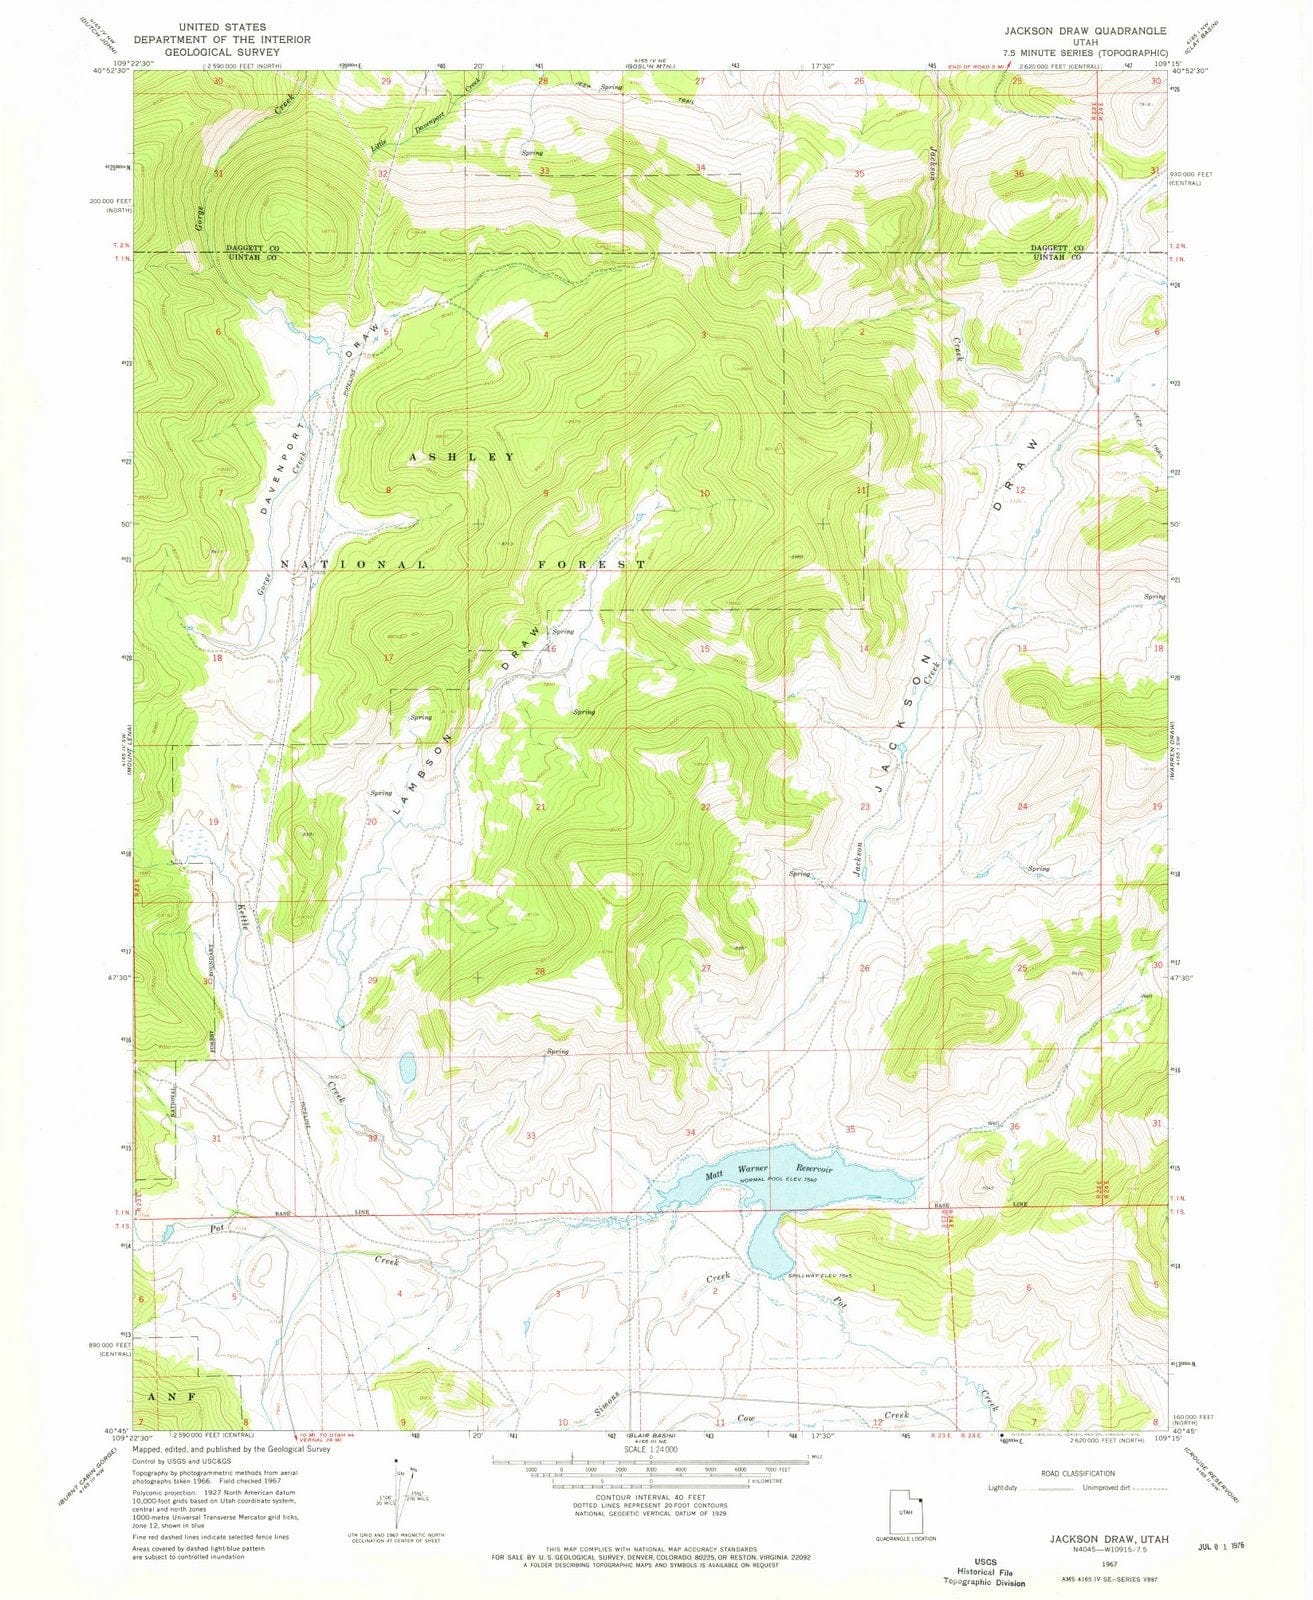 1967 Jacksonraw, UT - Utah - USGS Topographic Map